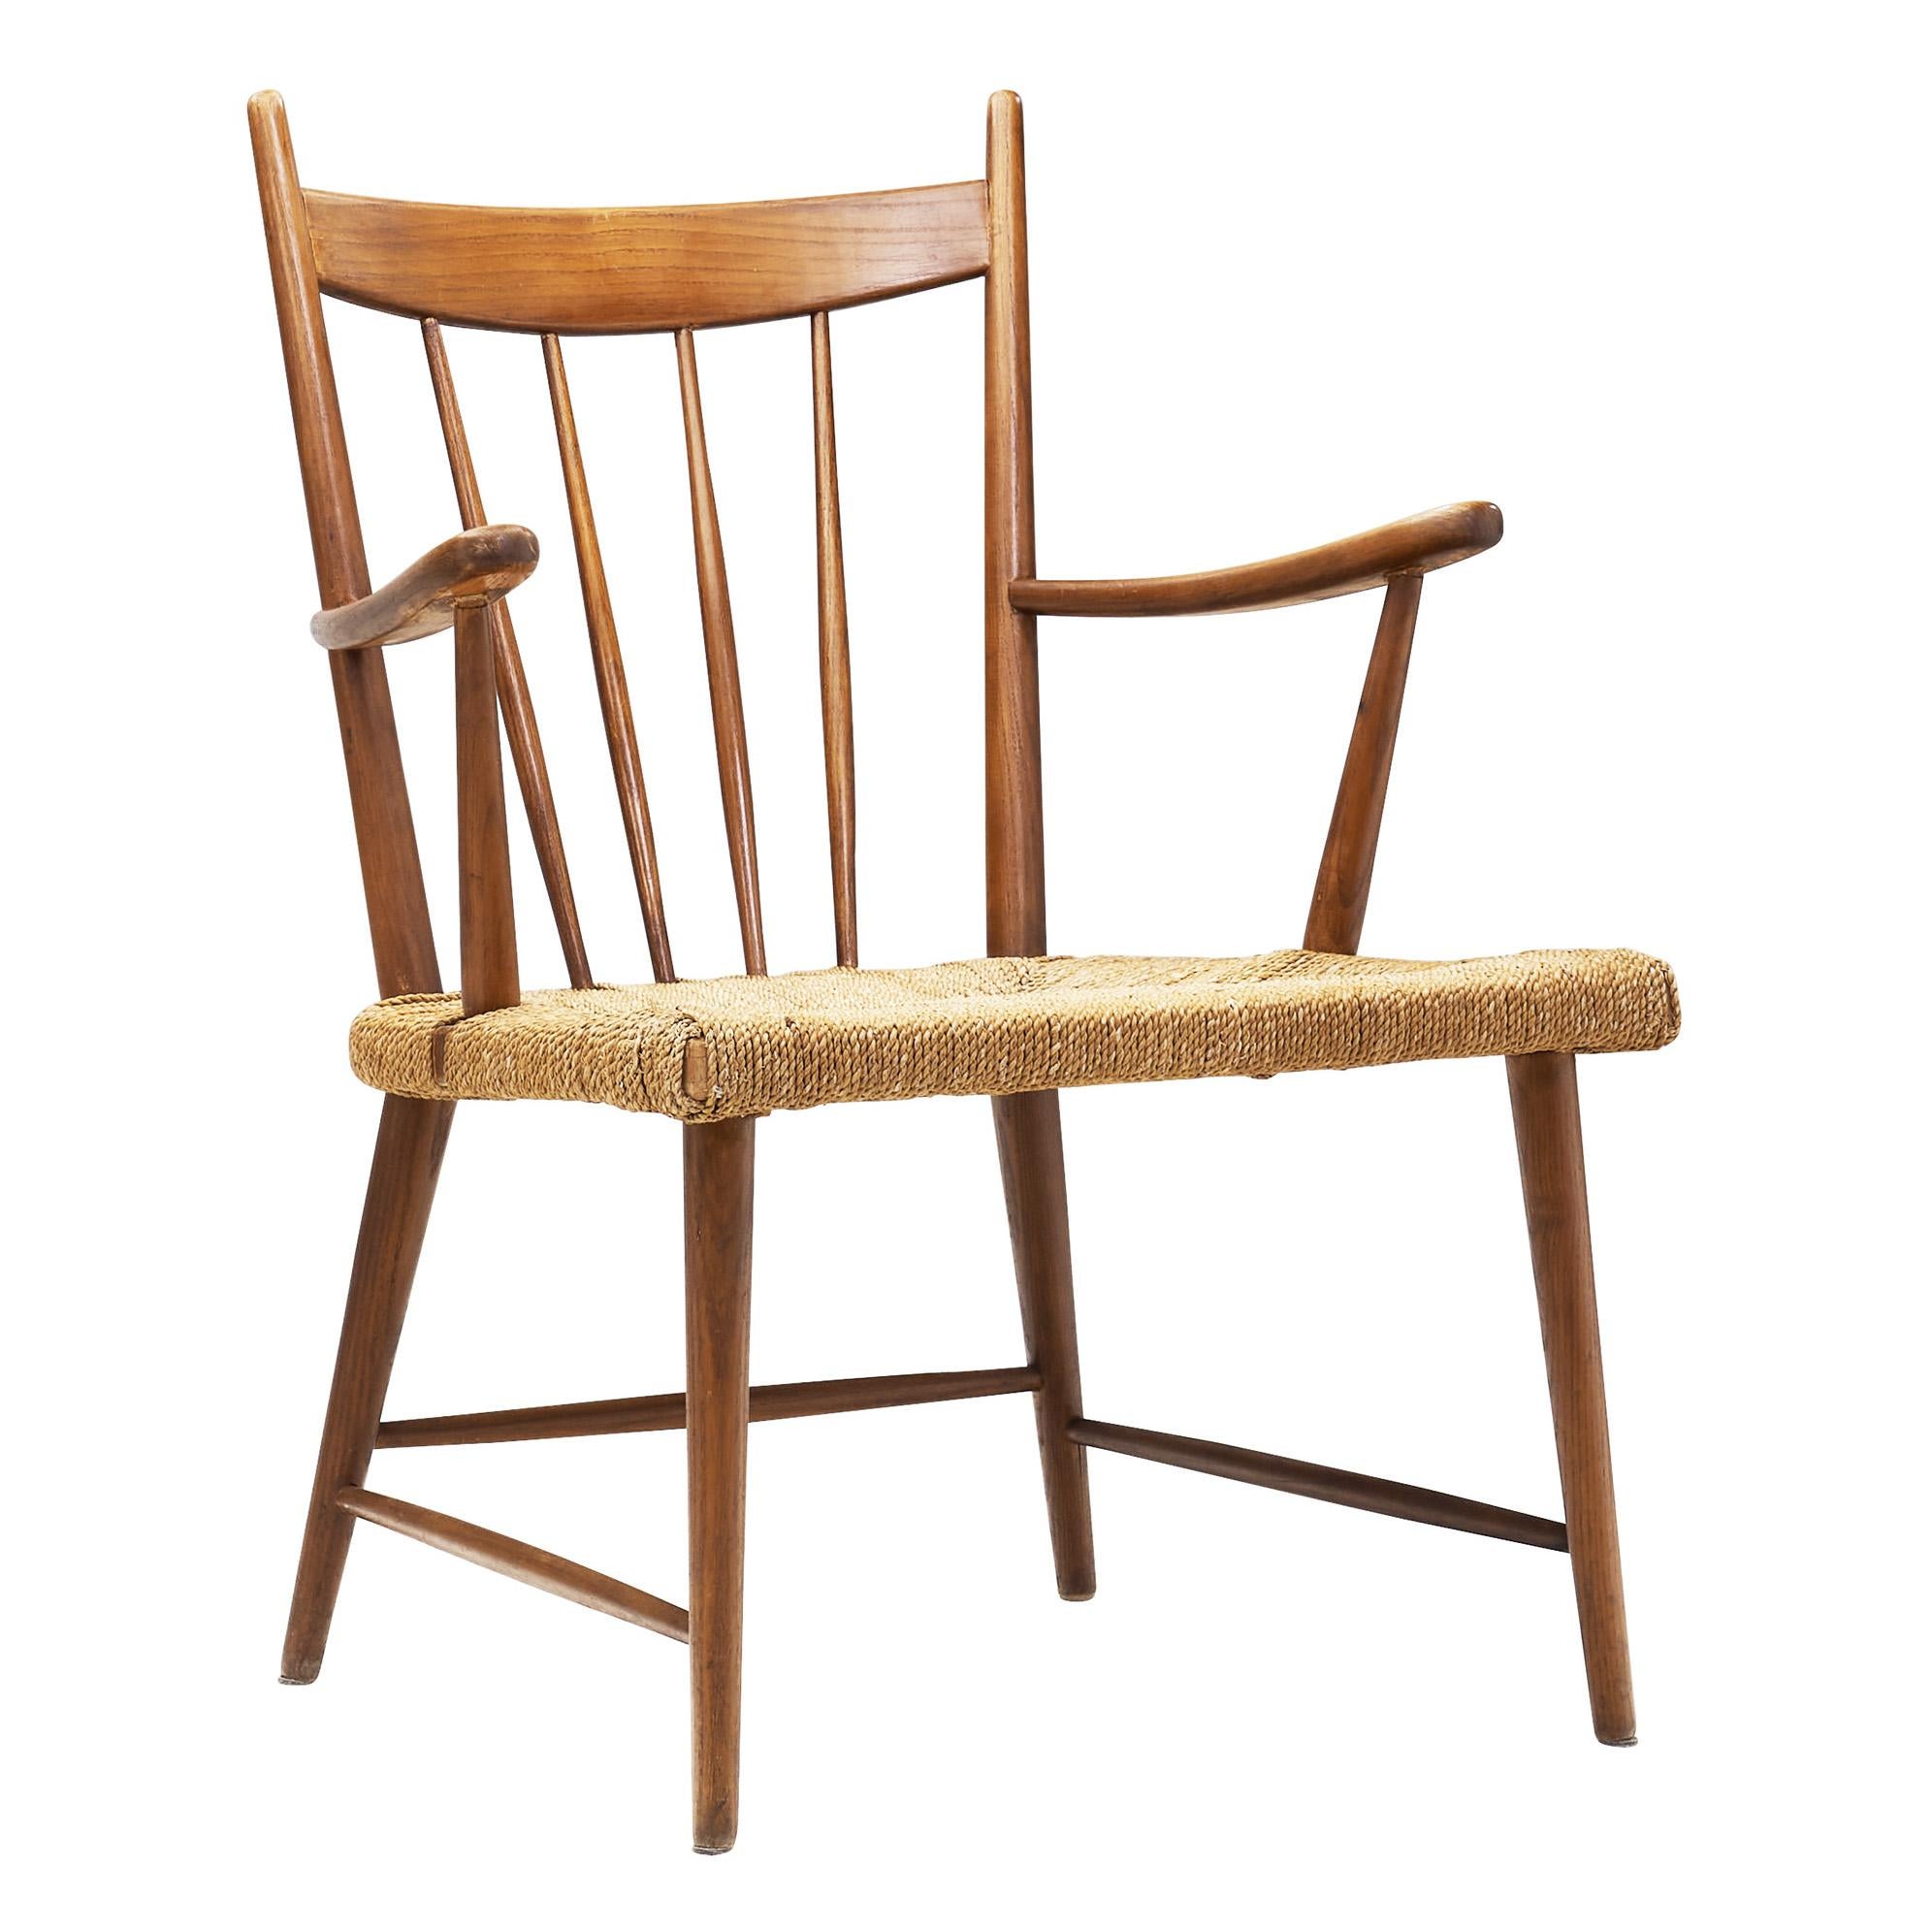 Teak Slatback Chair with Woven Danish Cord Seat, Denmark ca 1960s For Sale